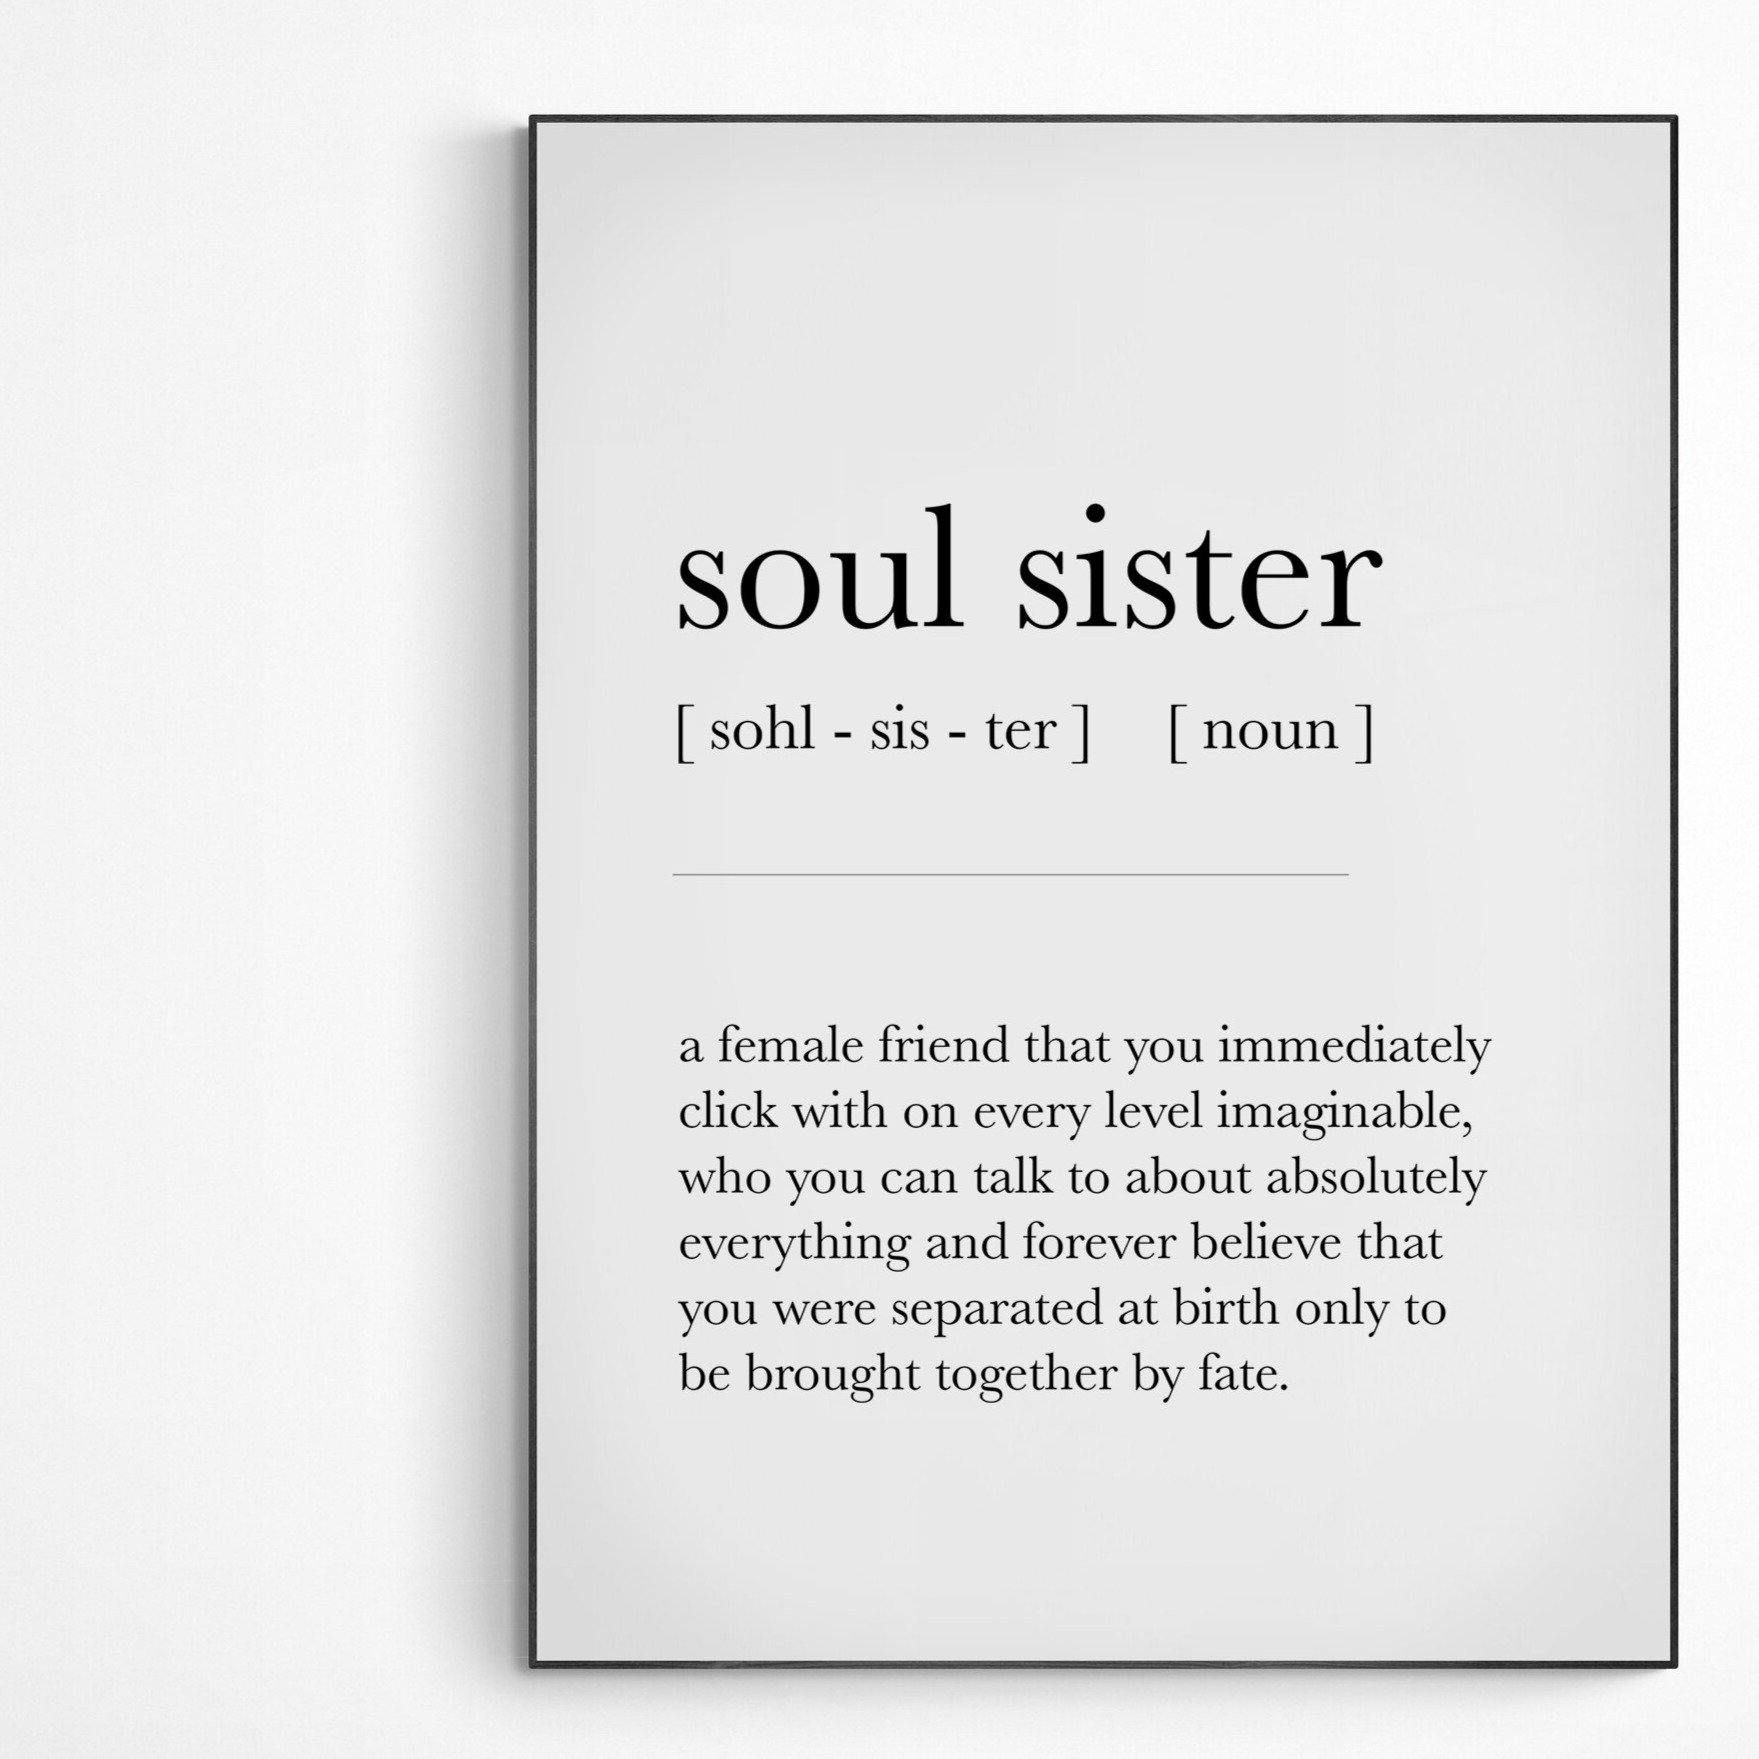 soul sister traduction